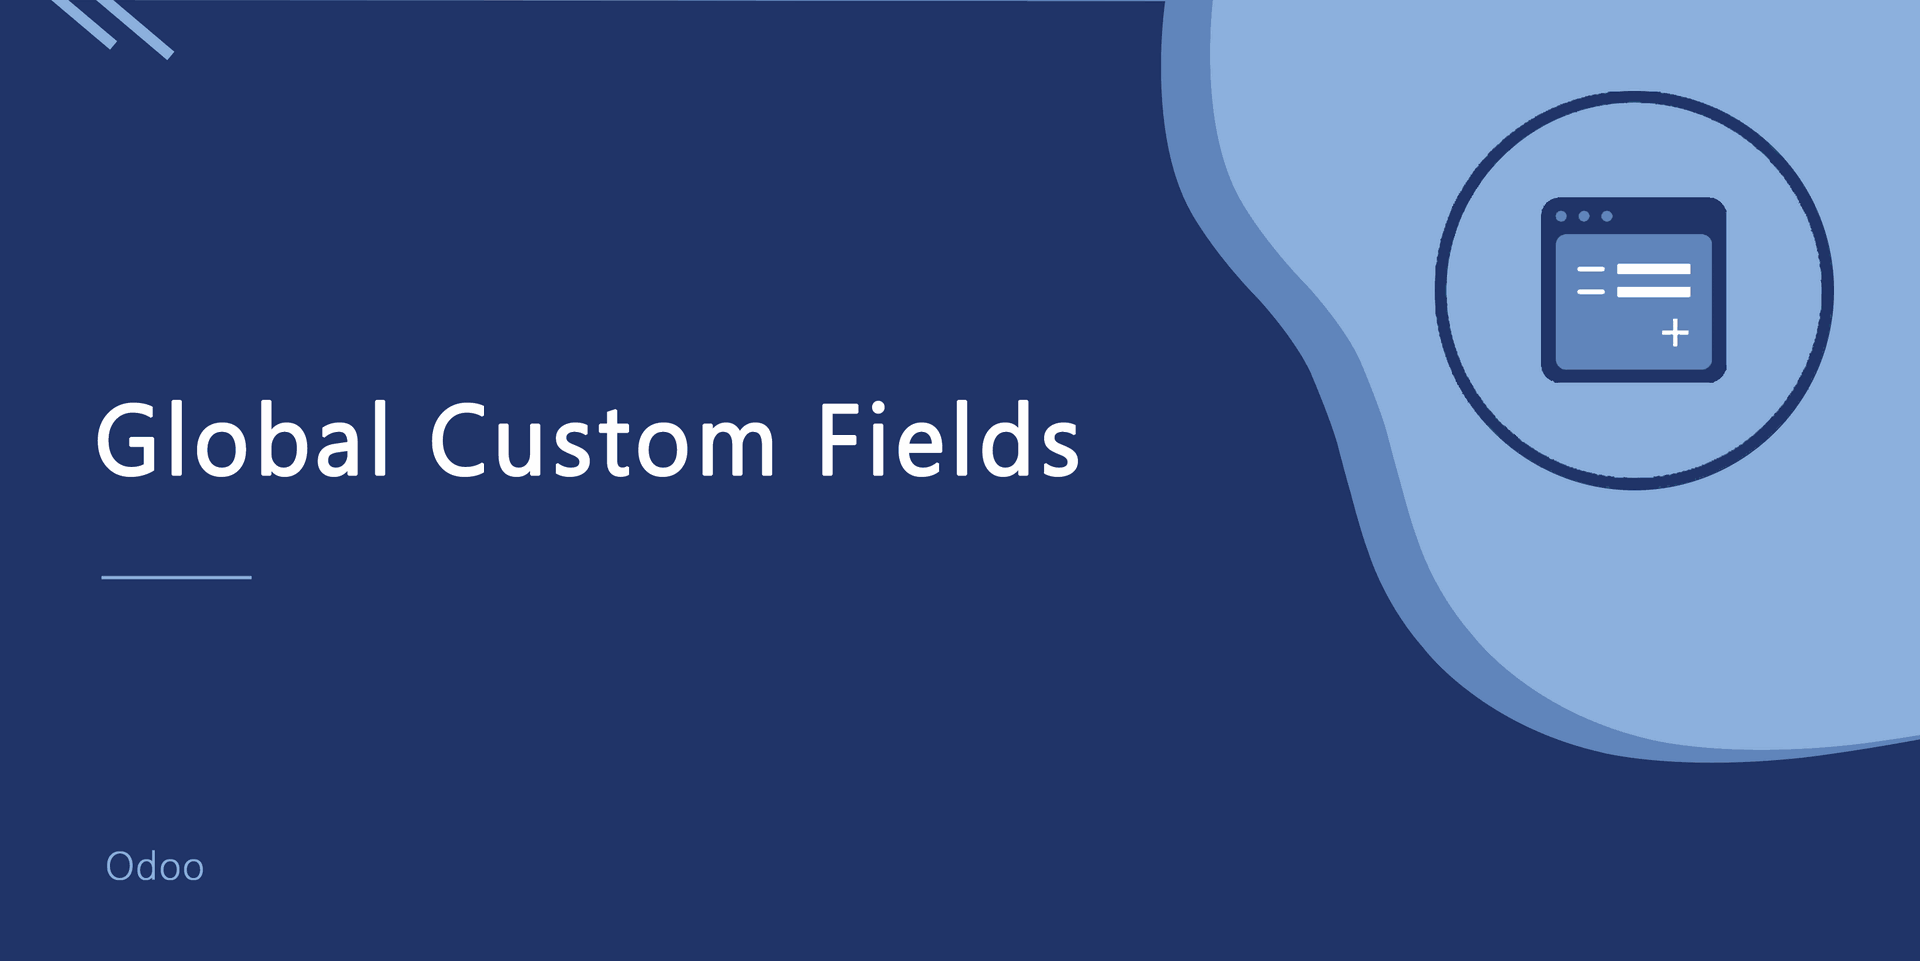 Global Custom Fields
